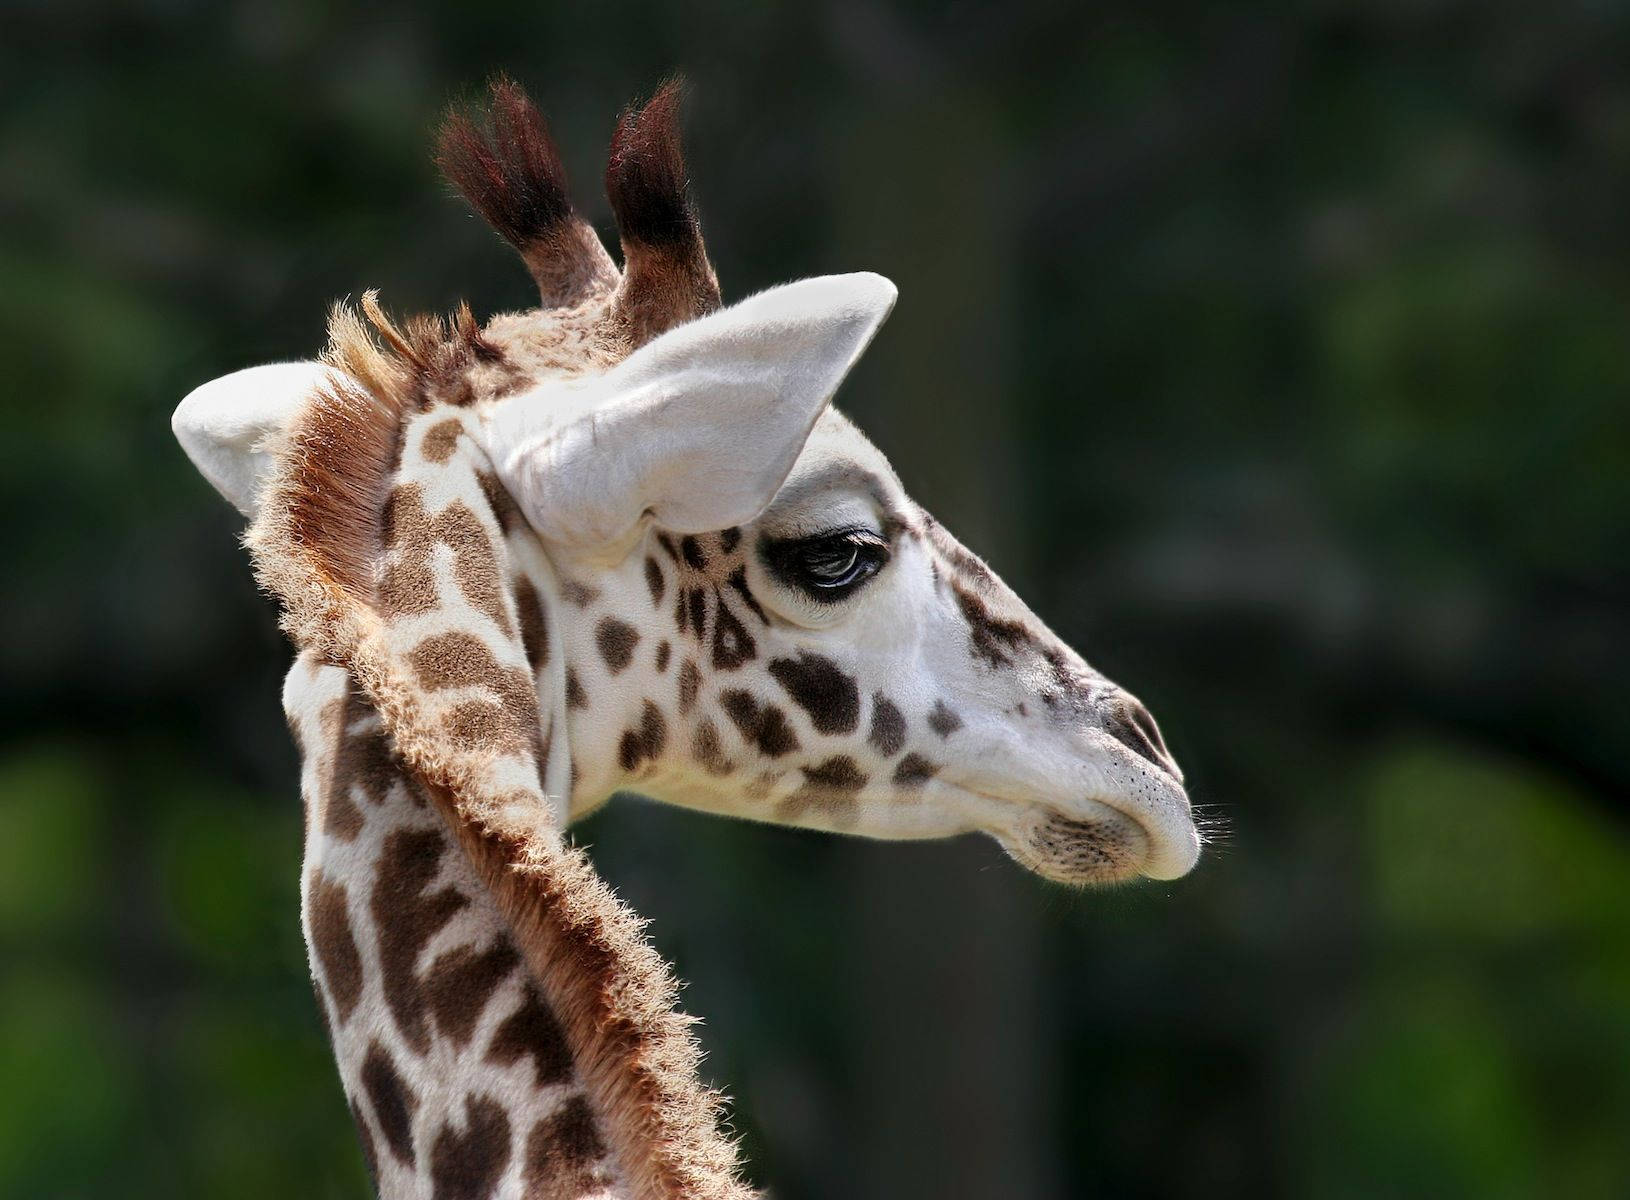 Baby Giraffe Long Reddish Hair